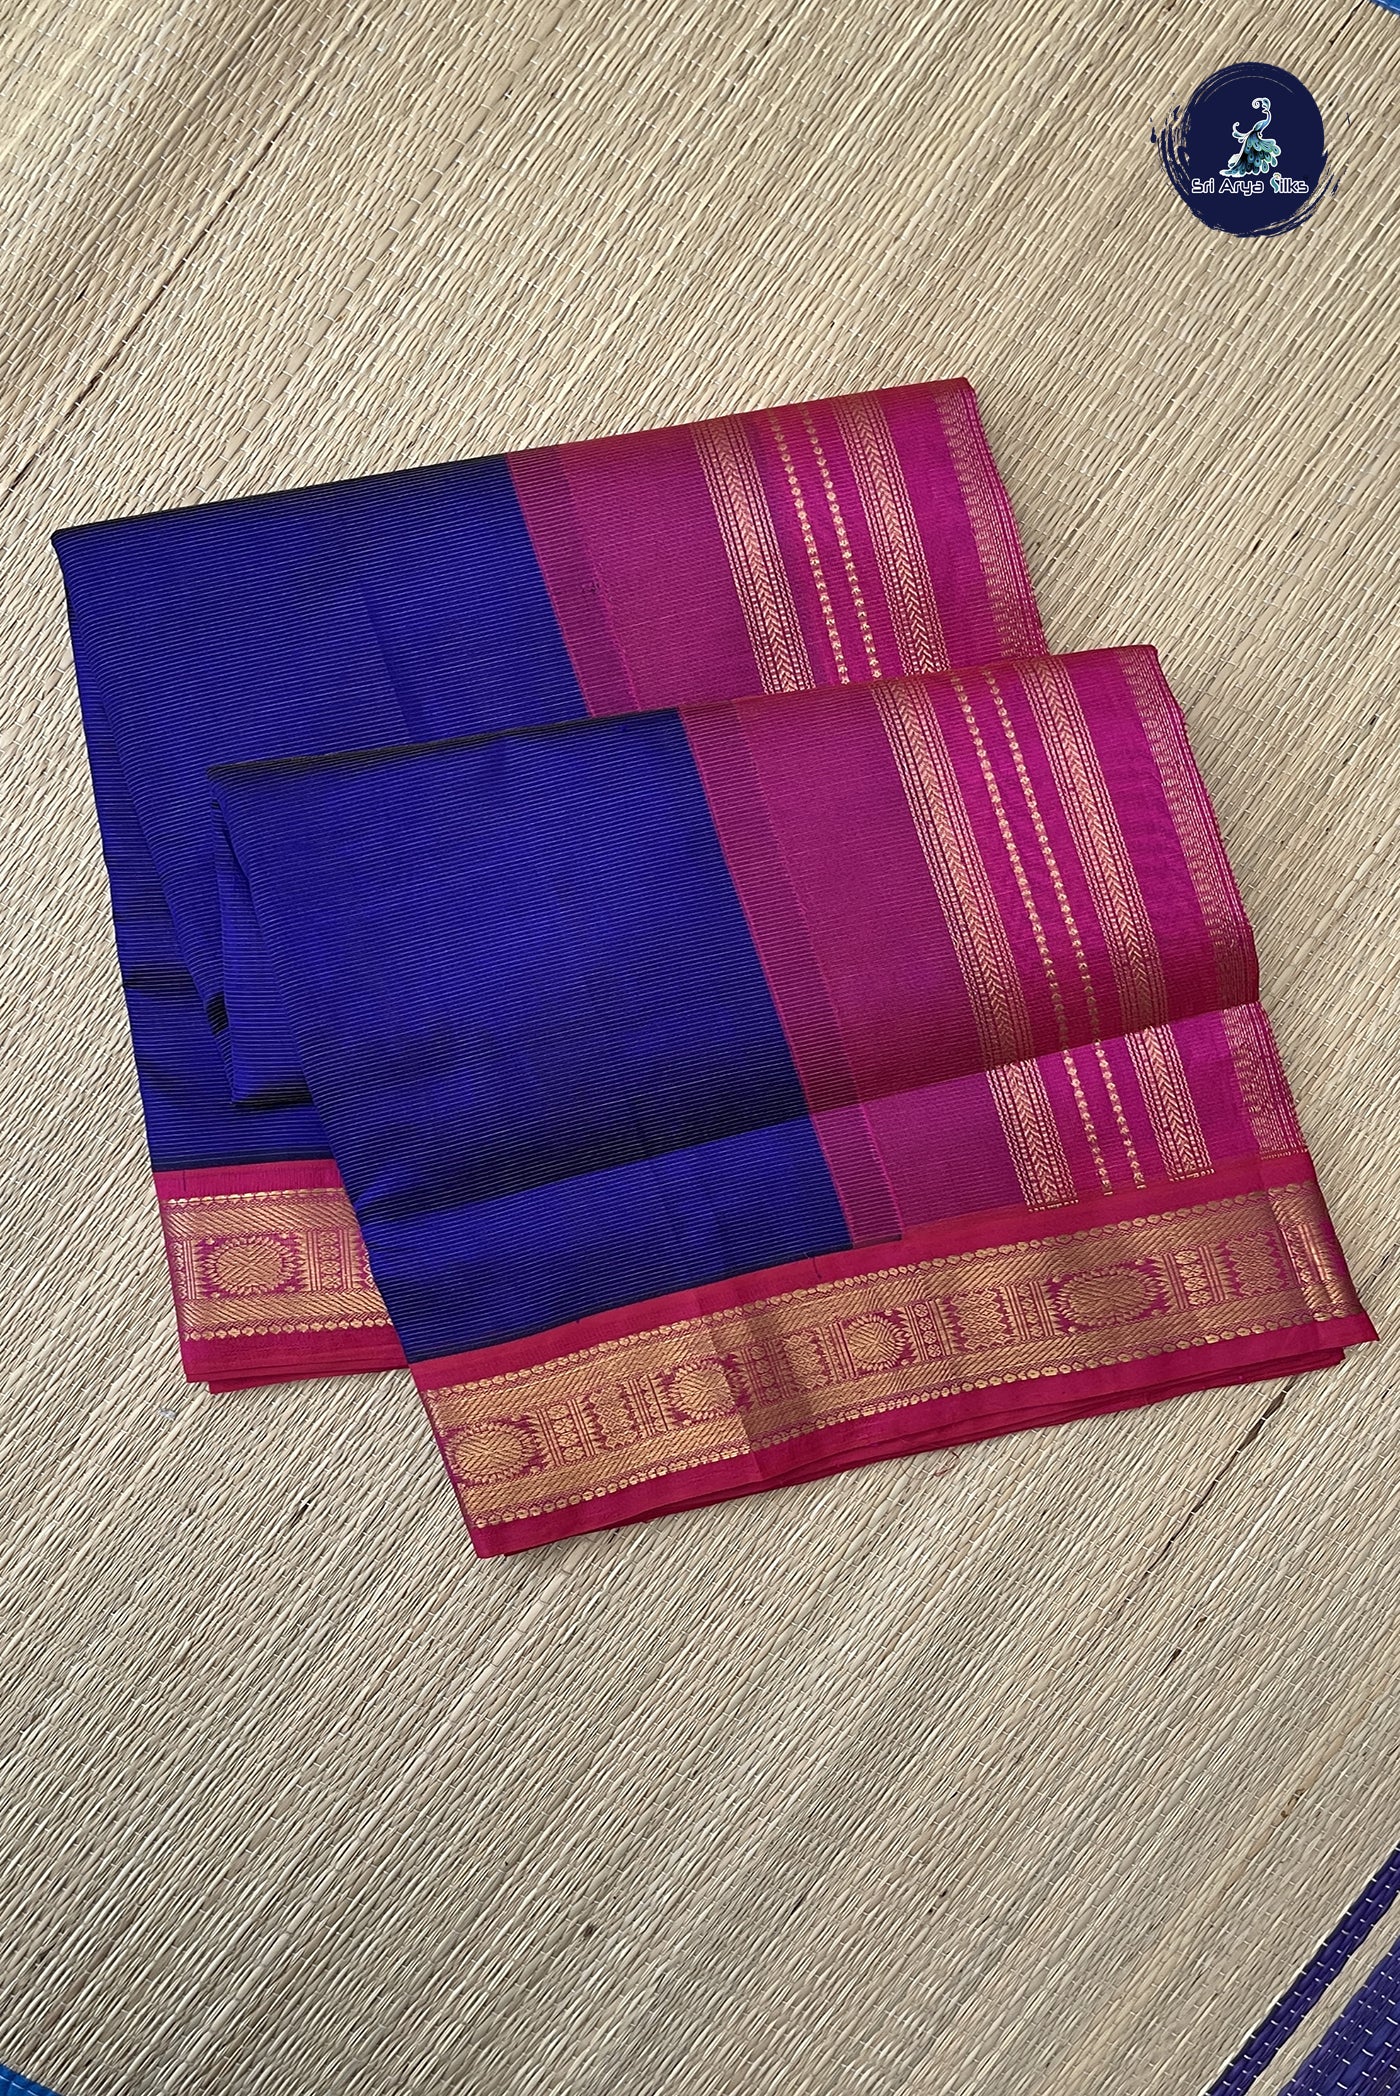 MS Blue Korvai Silk Cotton Saree With Vaira Oosi Pattern